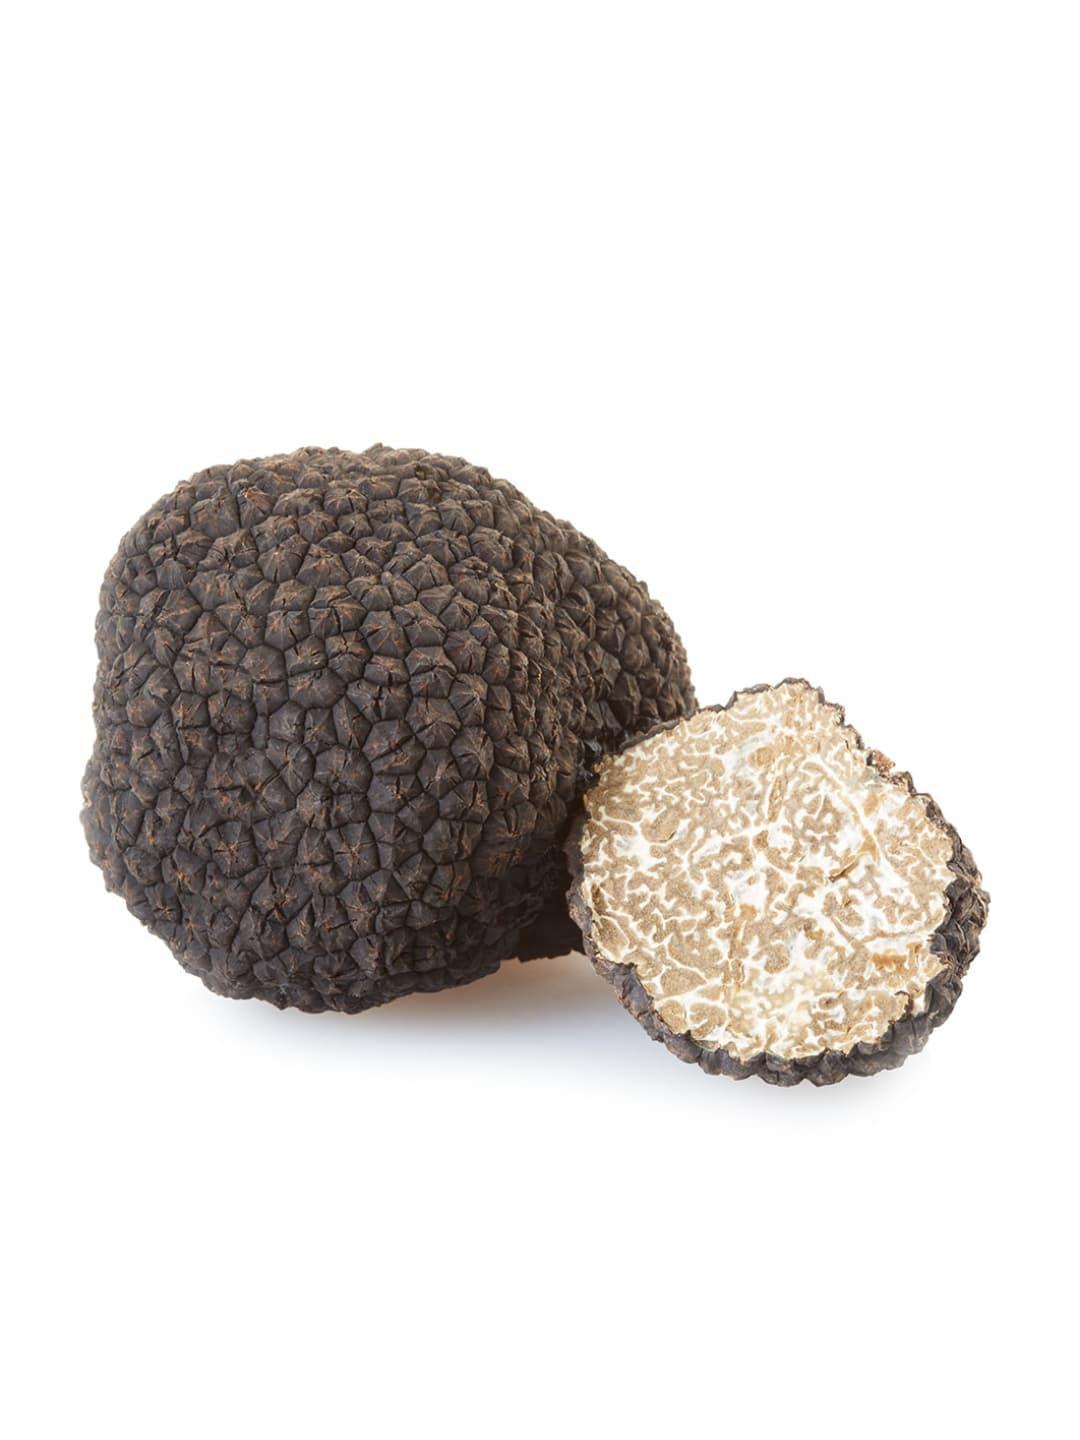 fresh black autumn truffle (tuber uncinatum chatin) 1 kg / 2_2 lb